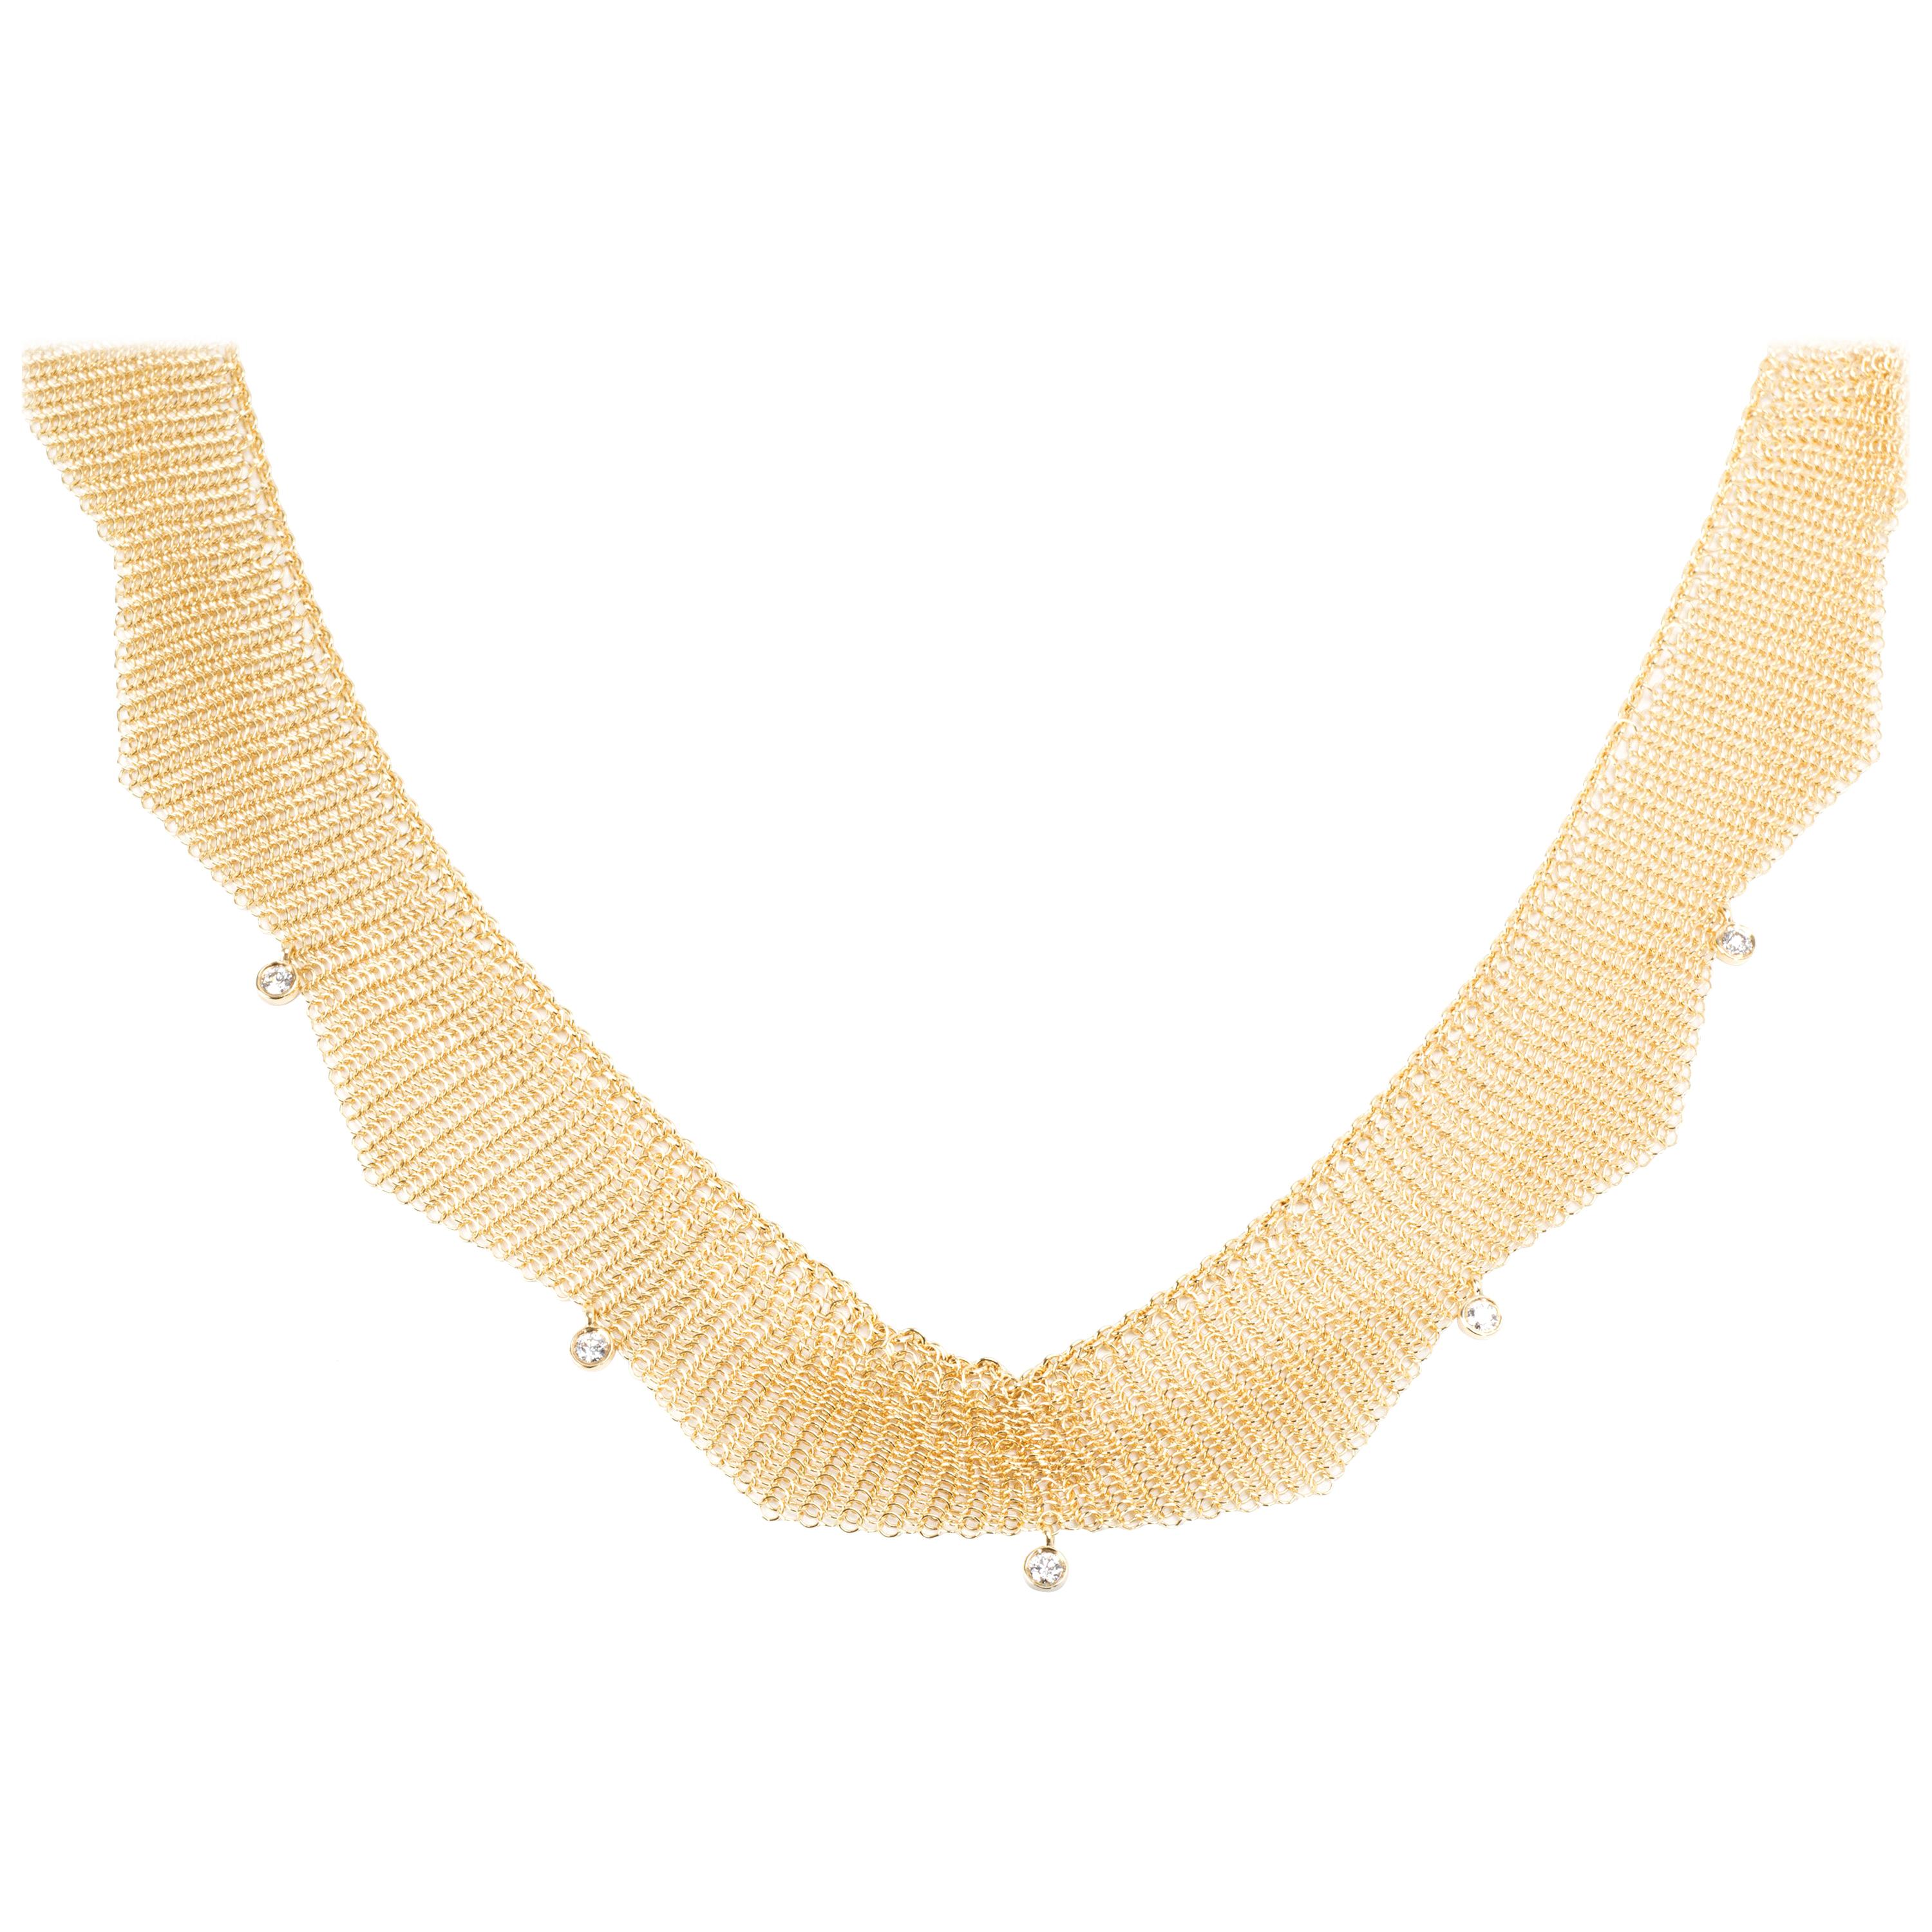 Tiffany & Co. Peretti Mesh Choker Diamond Necklace in 18K Yellow Gold 0.25 Carat